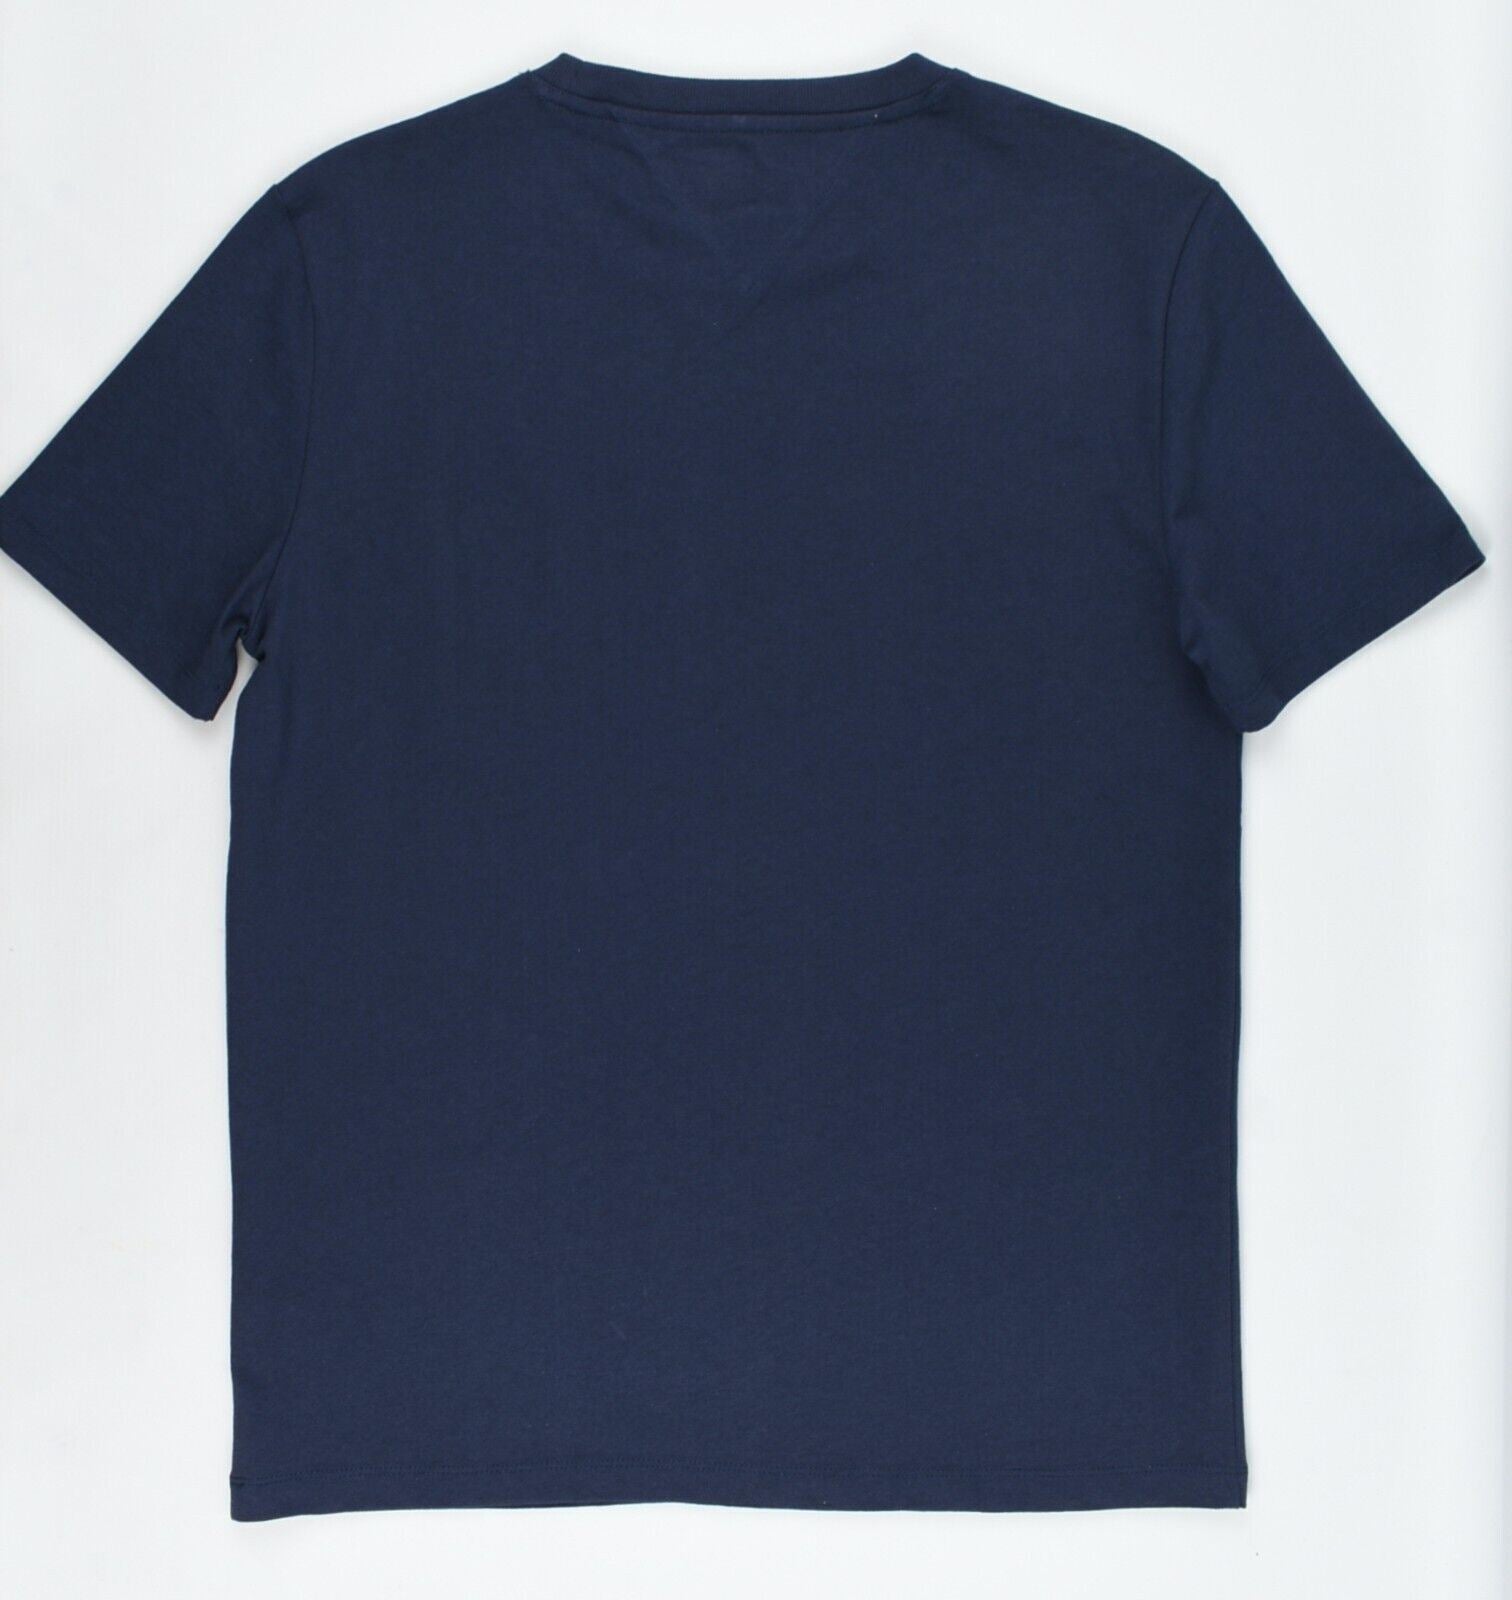 TOMMY HILFIGER Women's Collegiate Logo T-shirt, Twilight Blue, size XS (UK 8)